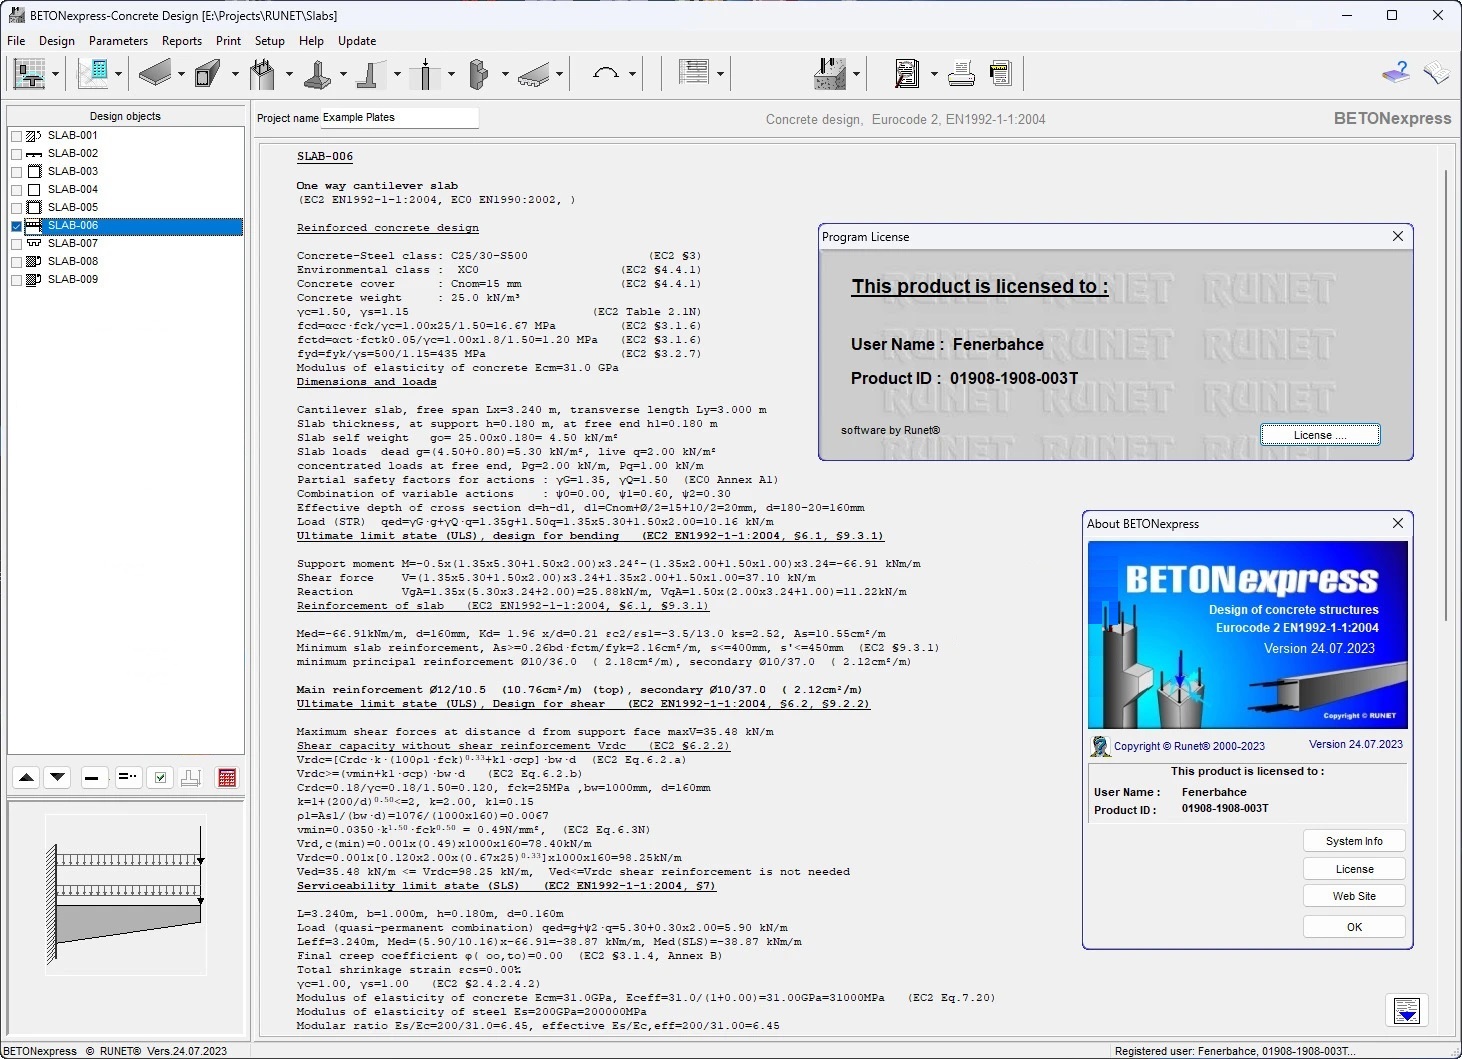 Working with RUNET software BETONexpress version 24.07.2023 full license